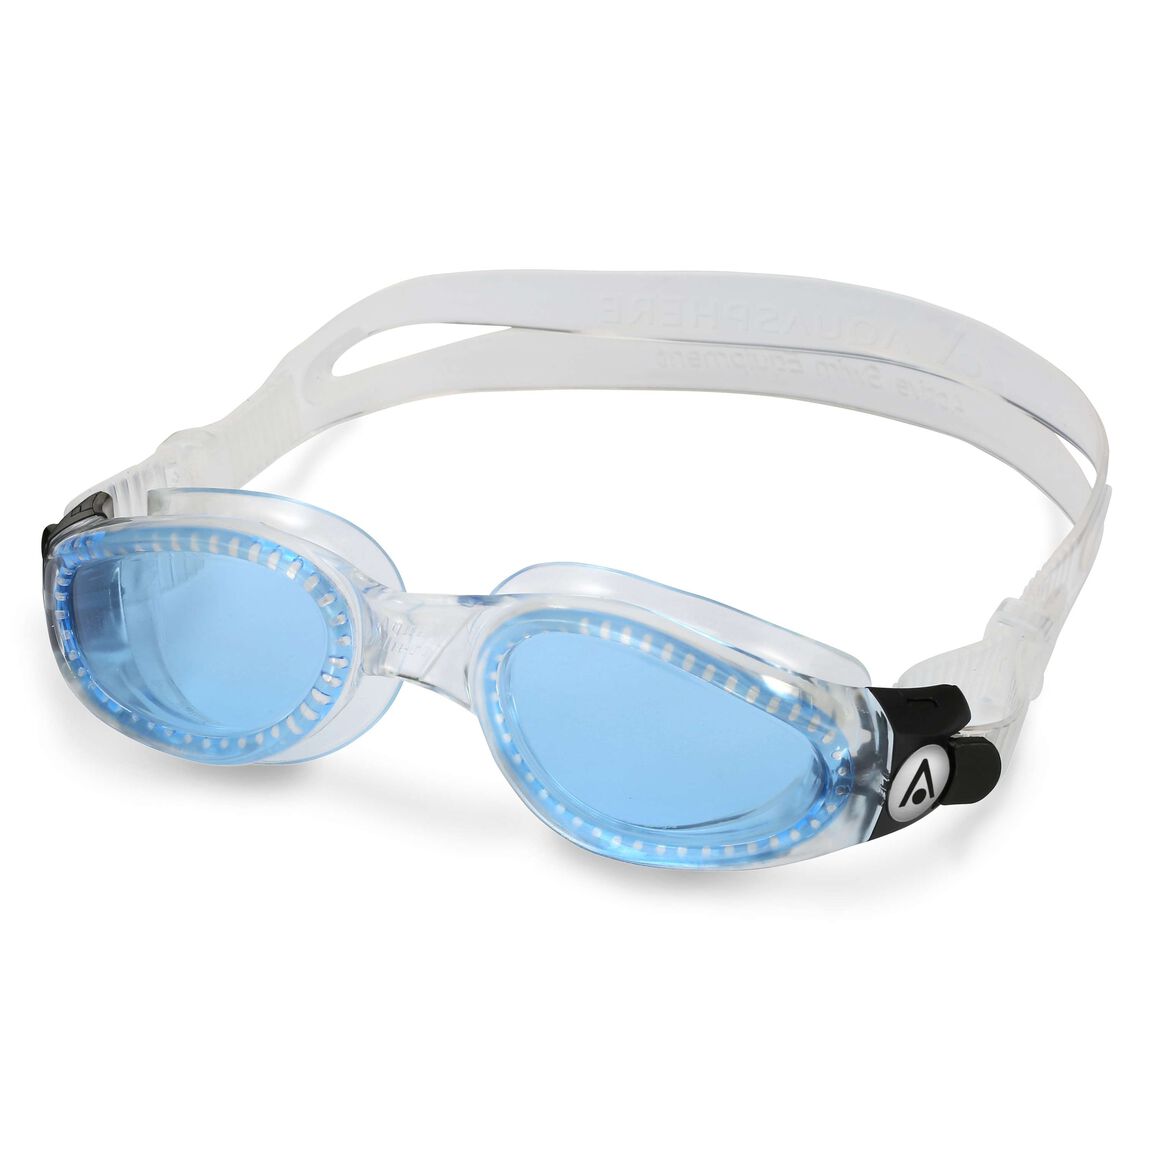 Aquasphere Kaiman Swim Goggles - Transparent/Blue Tint